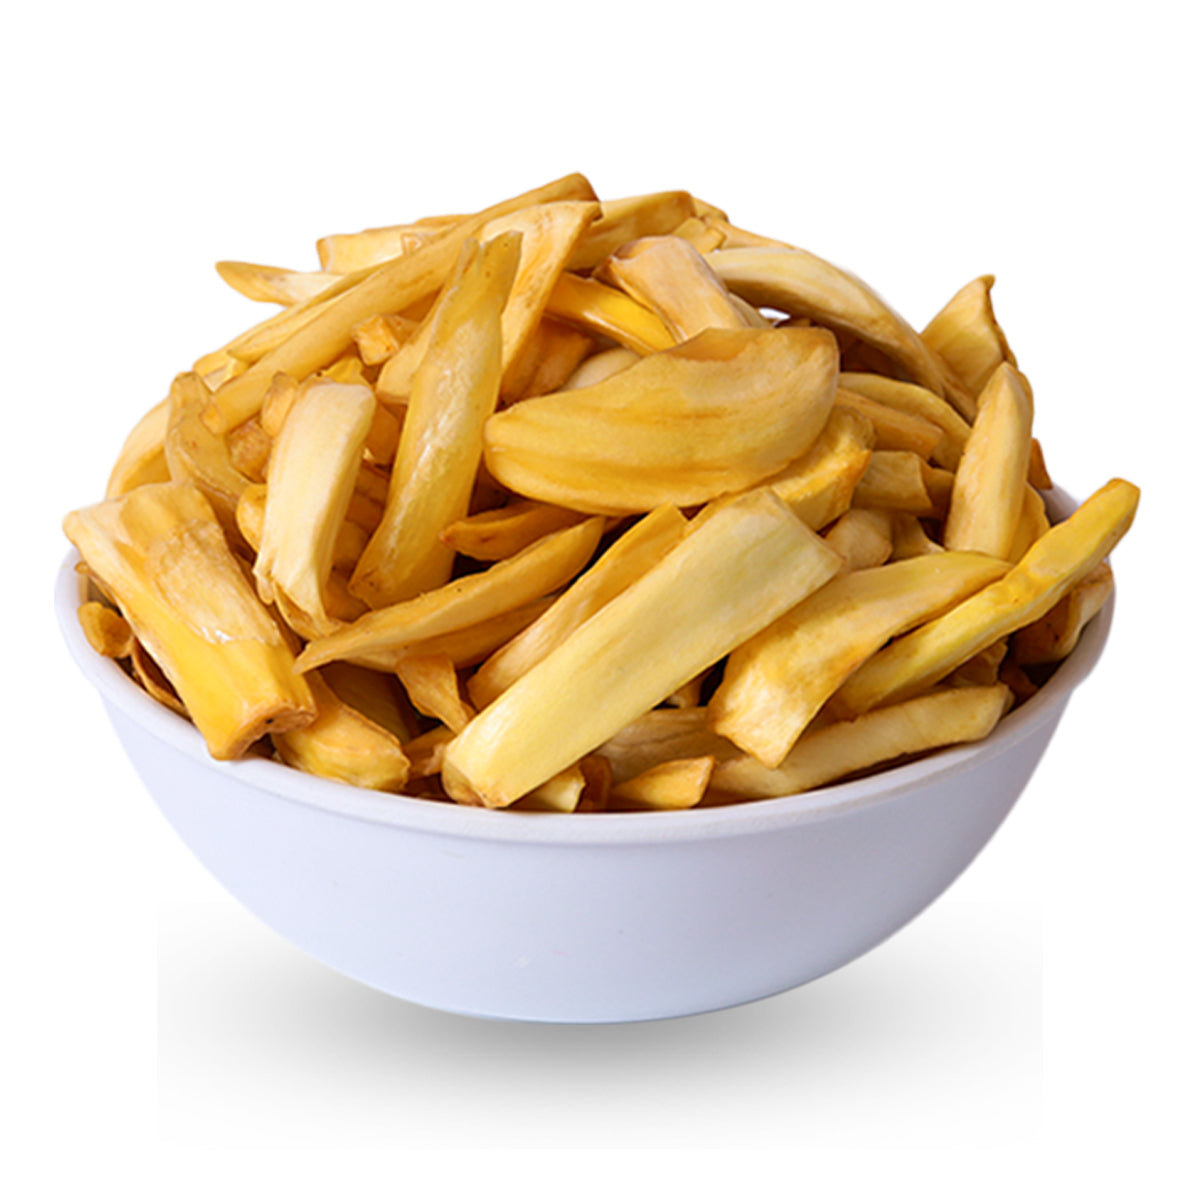 Kerala Chips Combo - Jackfruit Chips (500g) & Banana Chips (500g) - 1kg